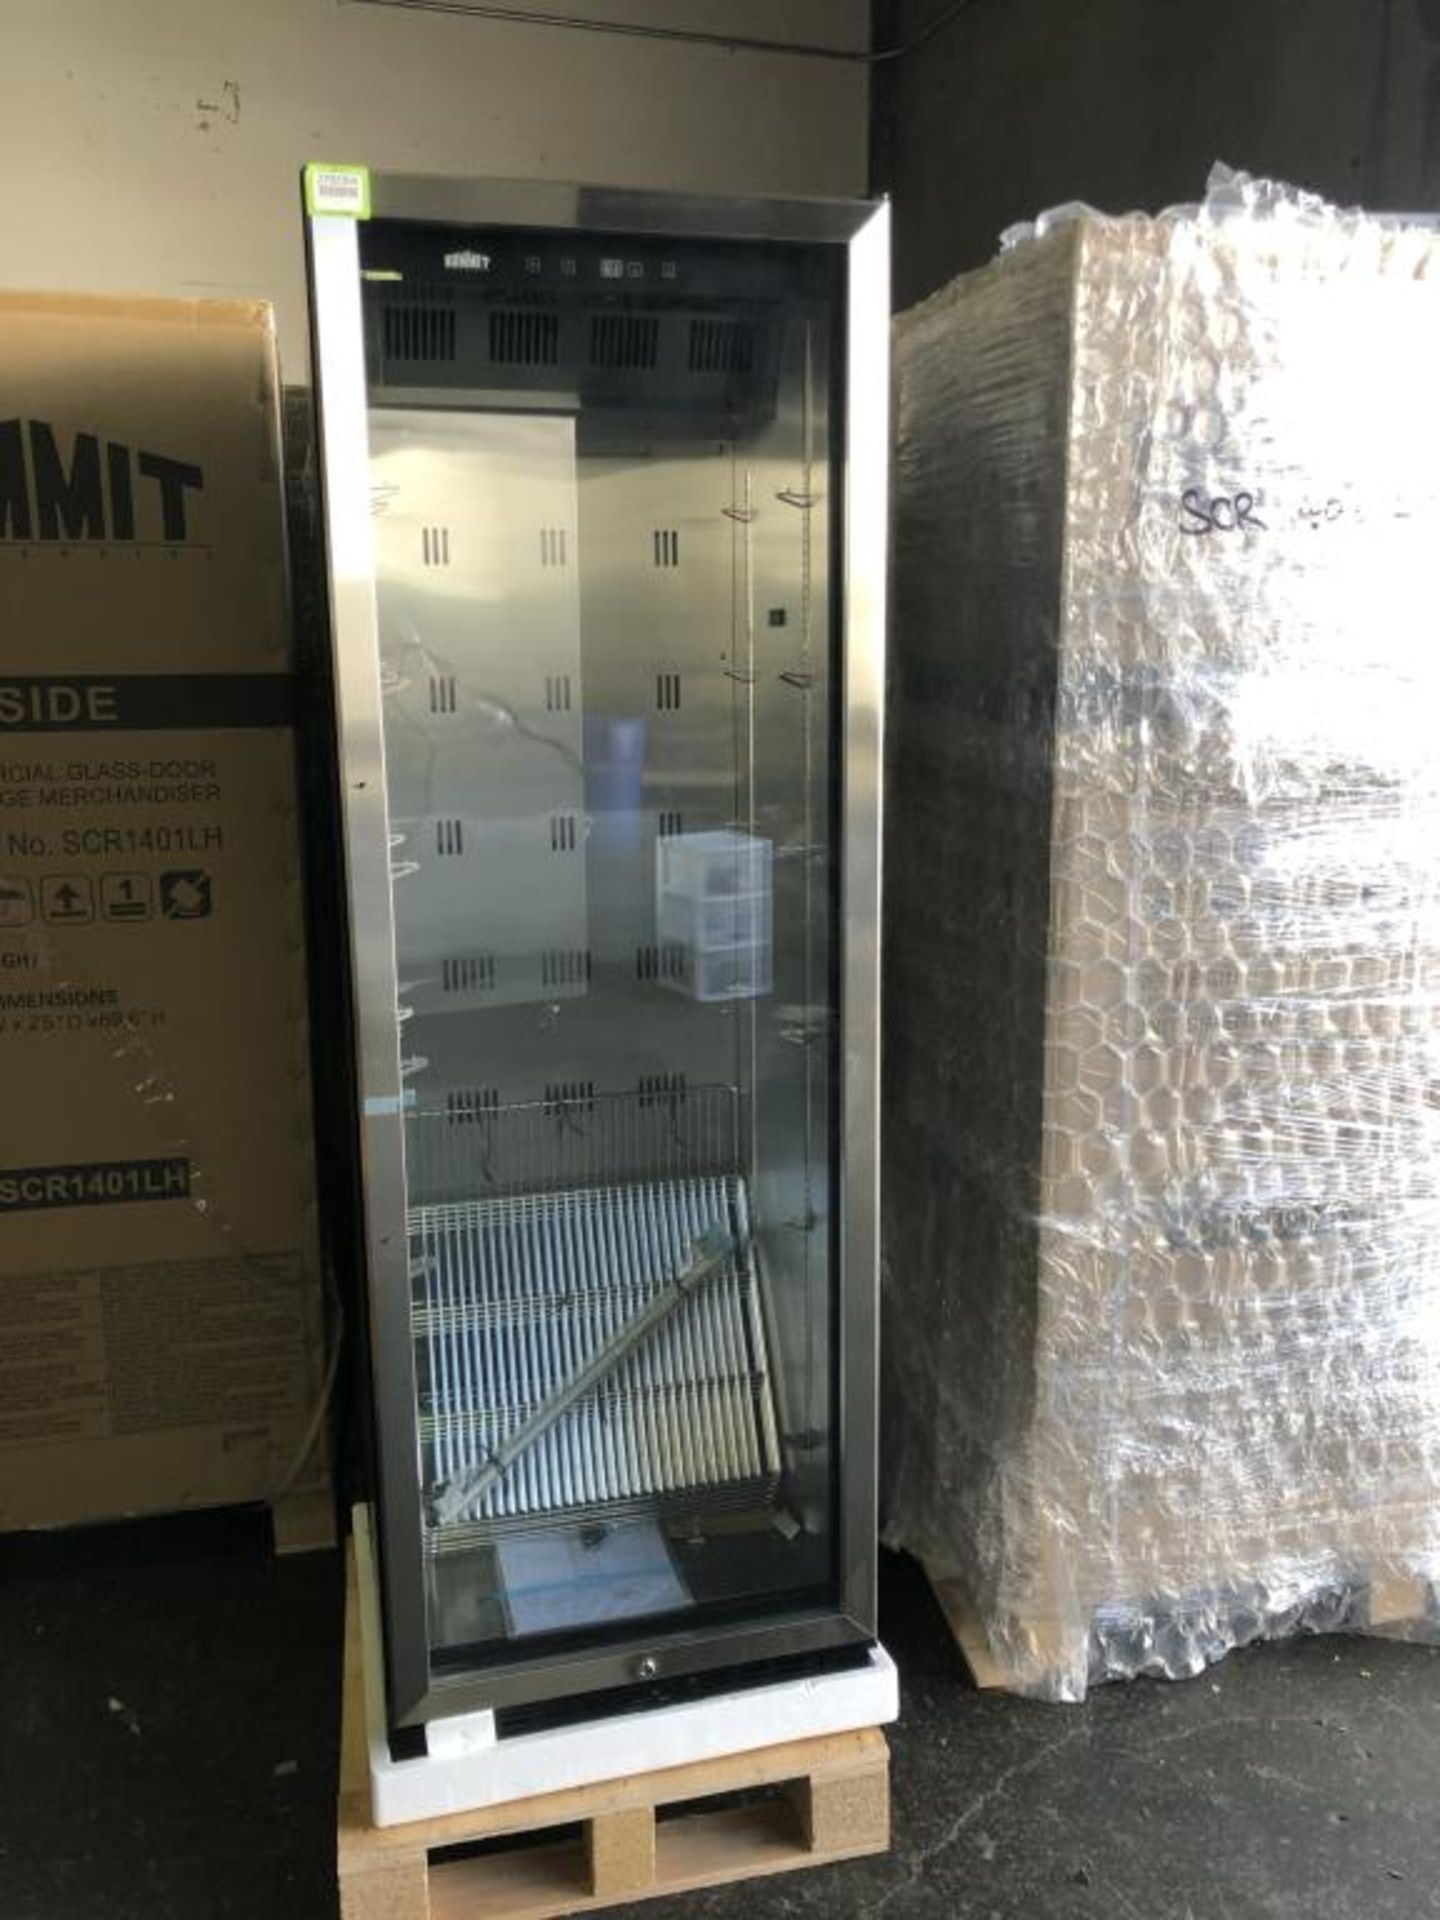 Summit SCR1401 Glass Door Bev. Refrigerator *New*